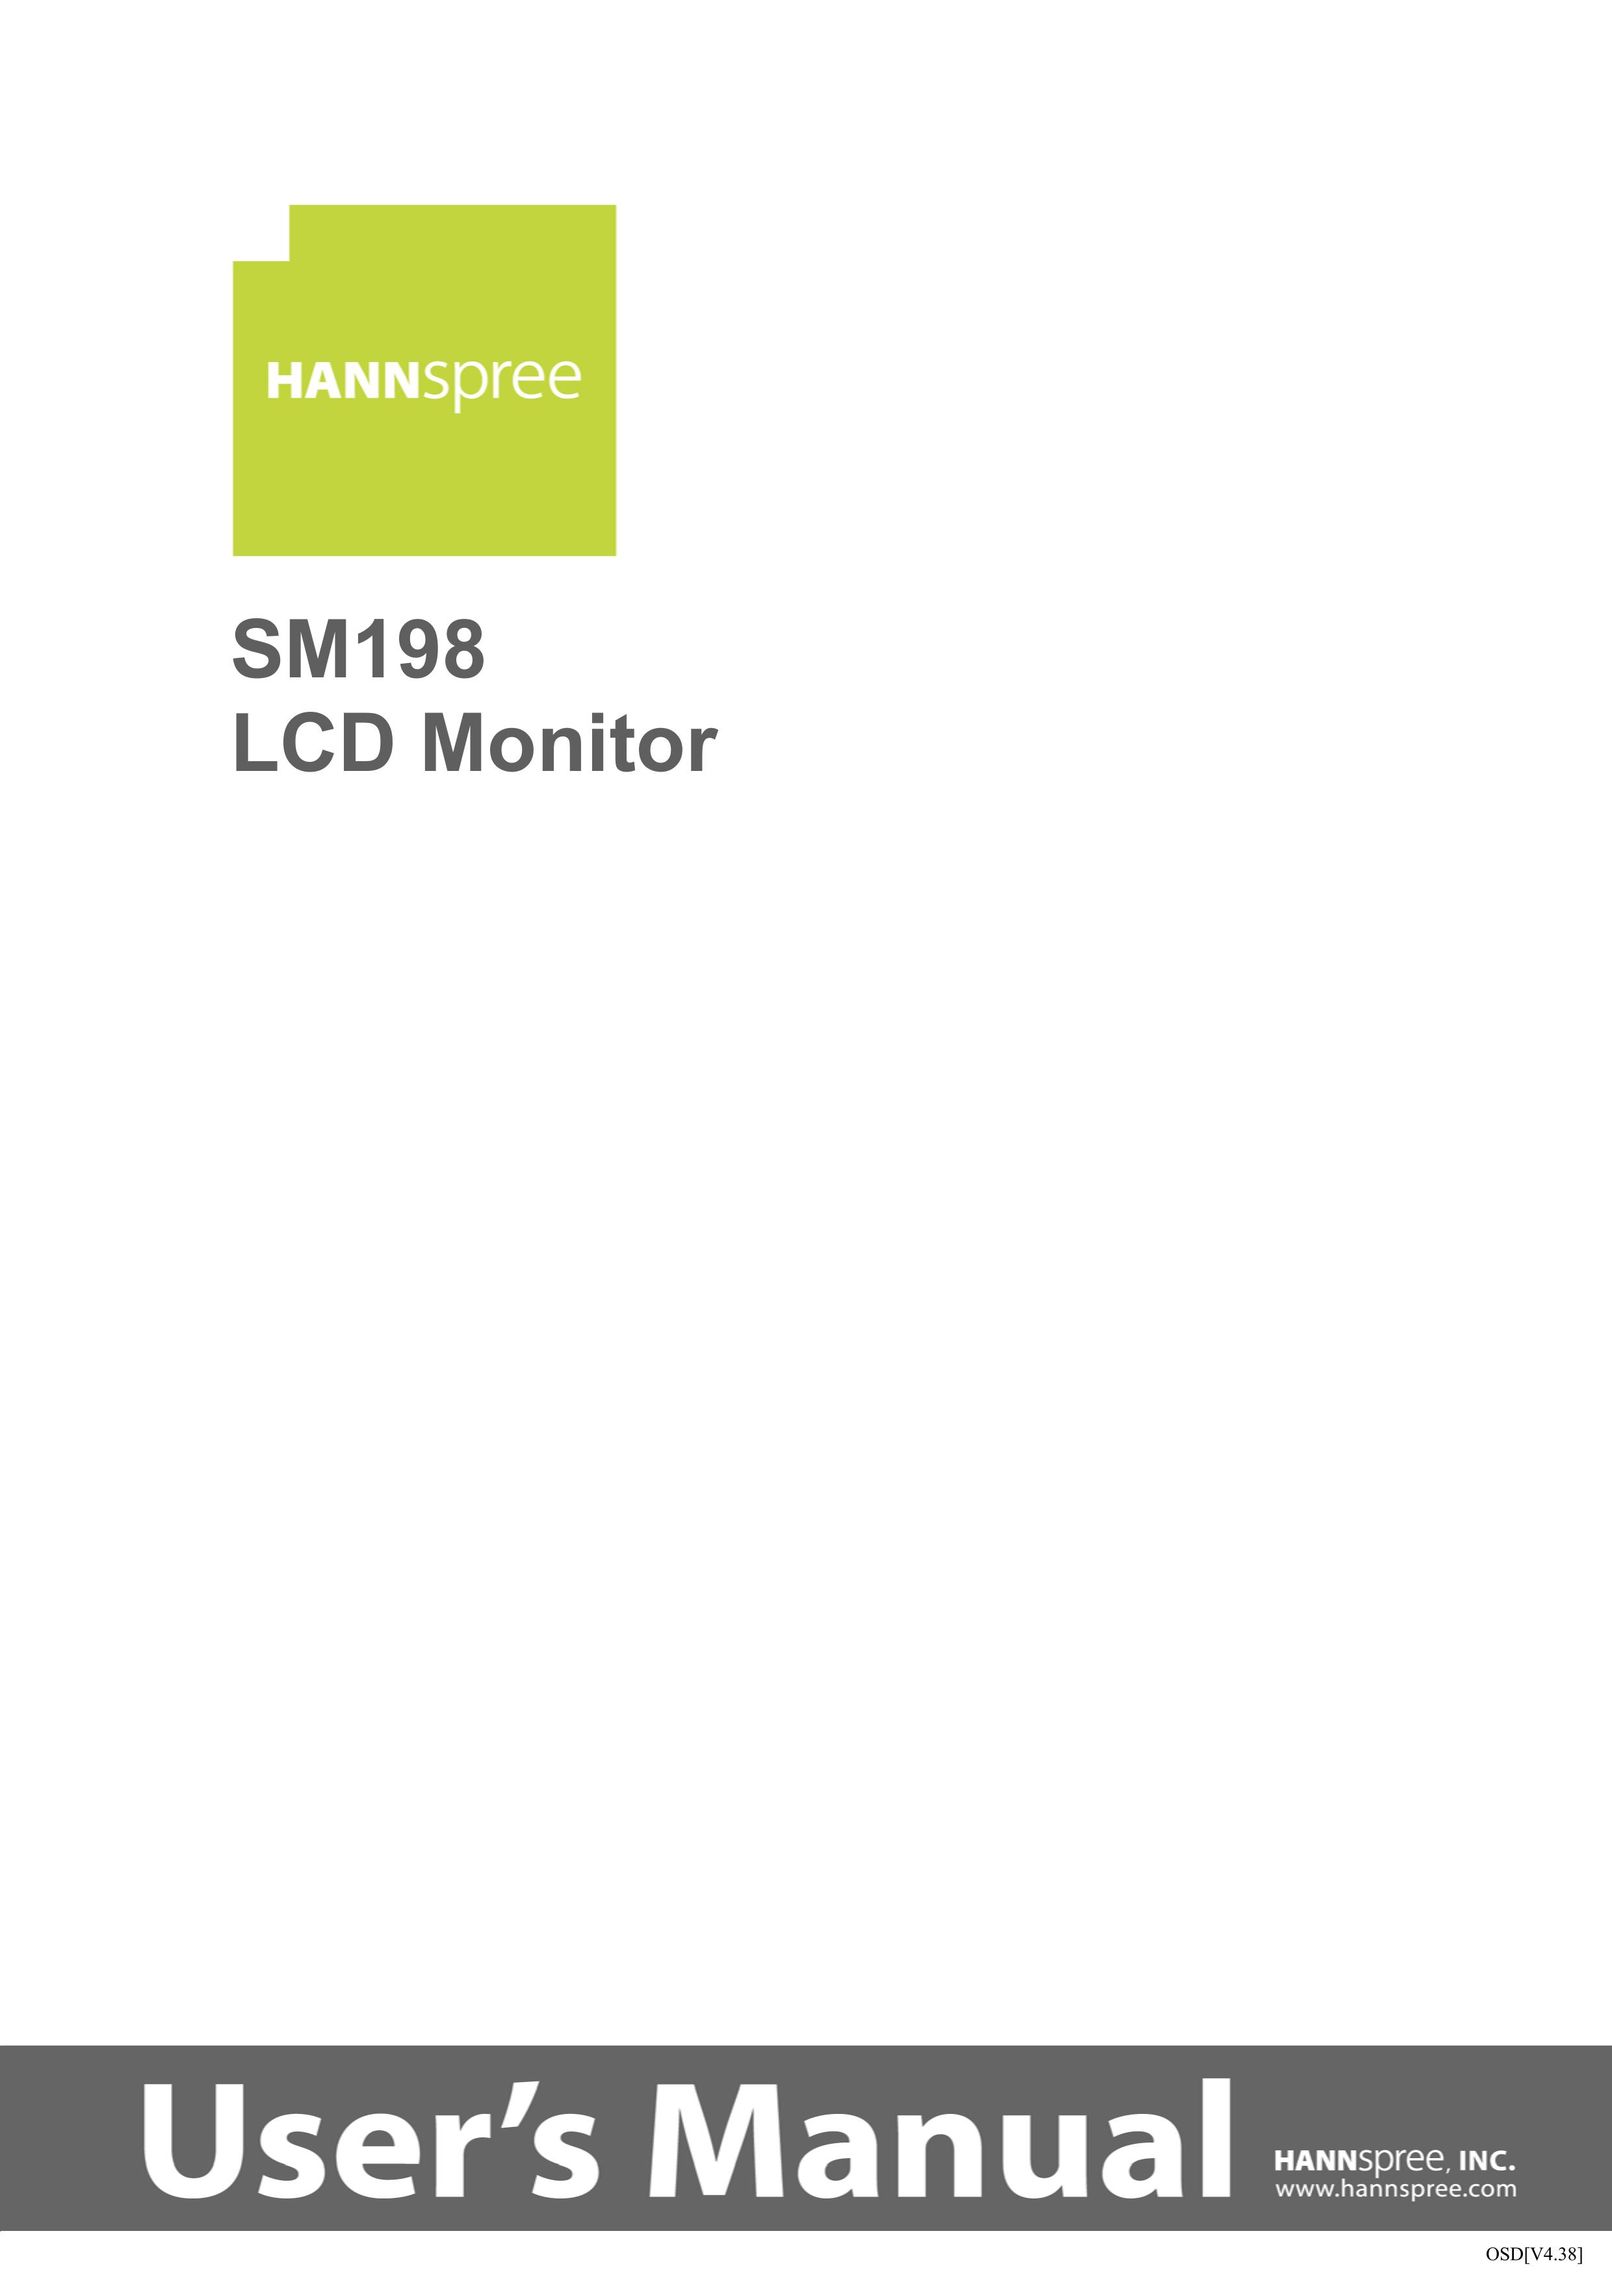 HANNspree SM198 Computer Monitor User Manual